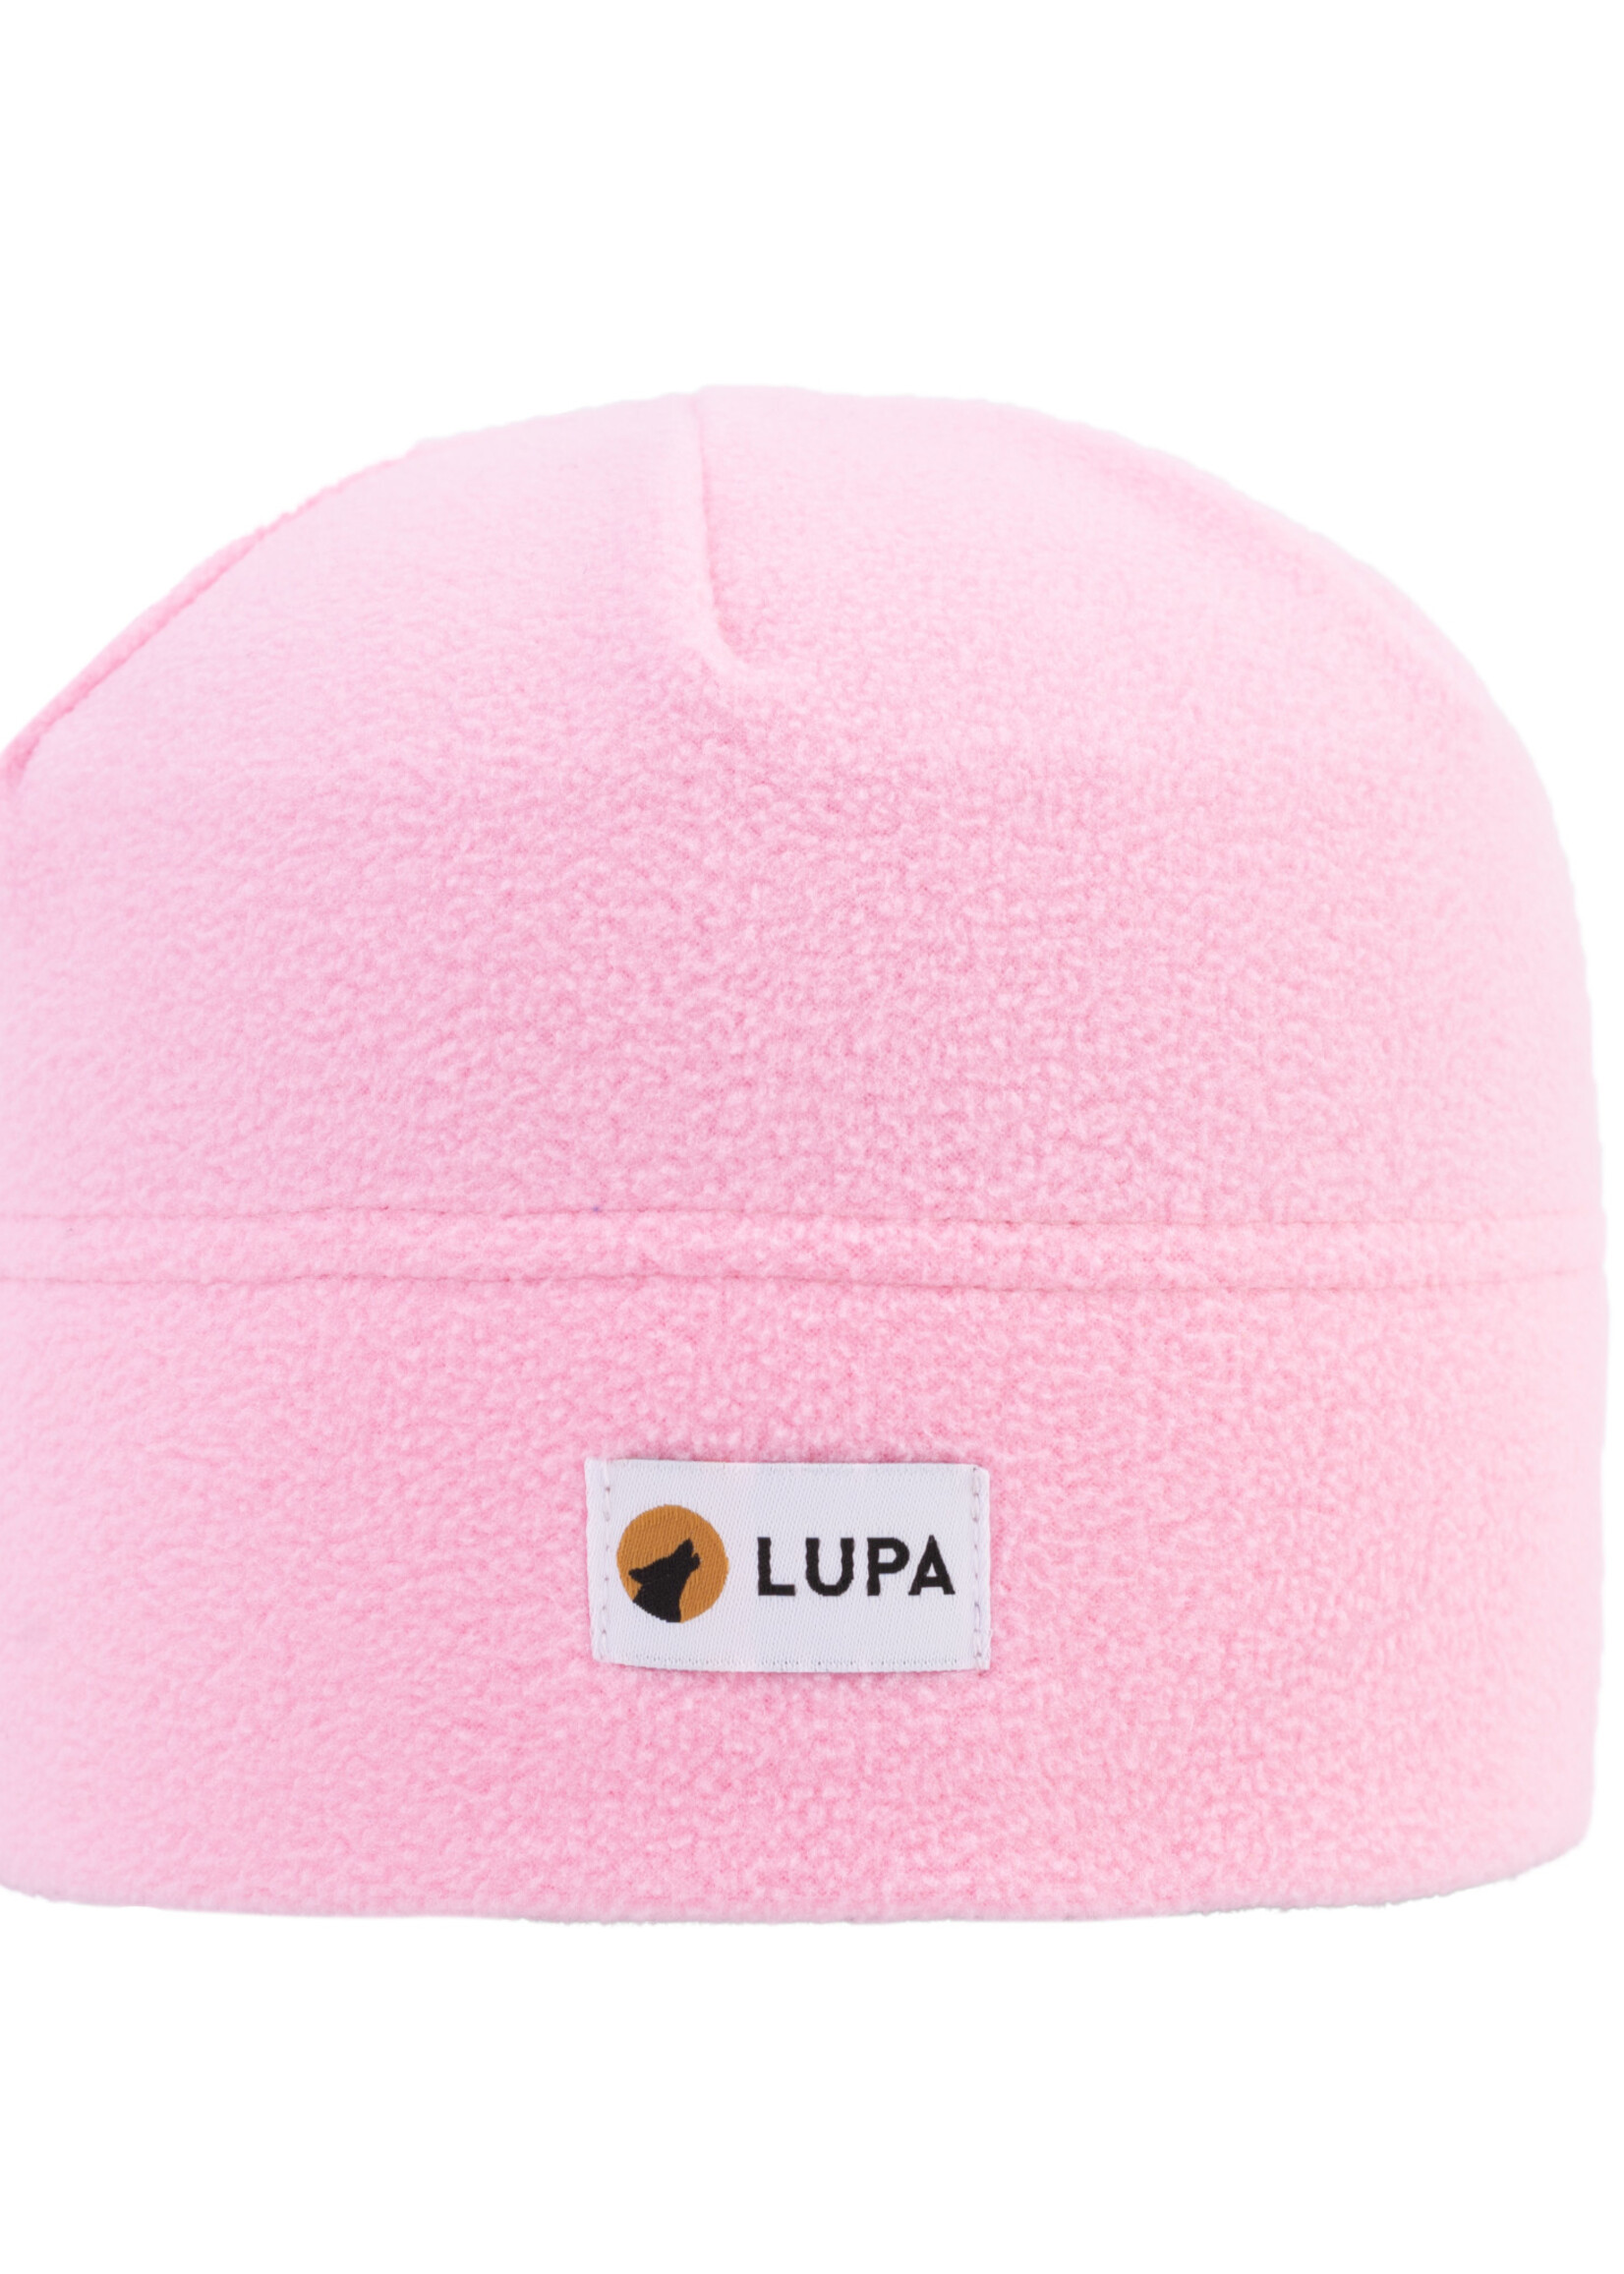 Lupa Tuque Polaire Multi-Saison Adulte Pink | Multi-season Fleece Beanie Adult Pink